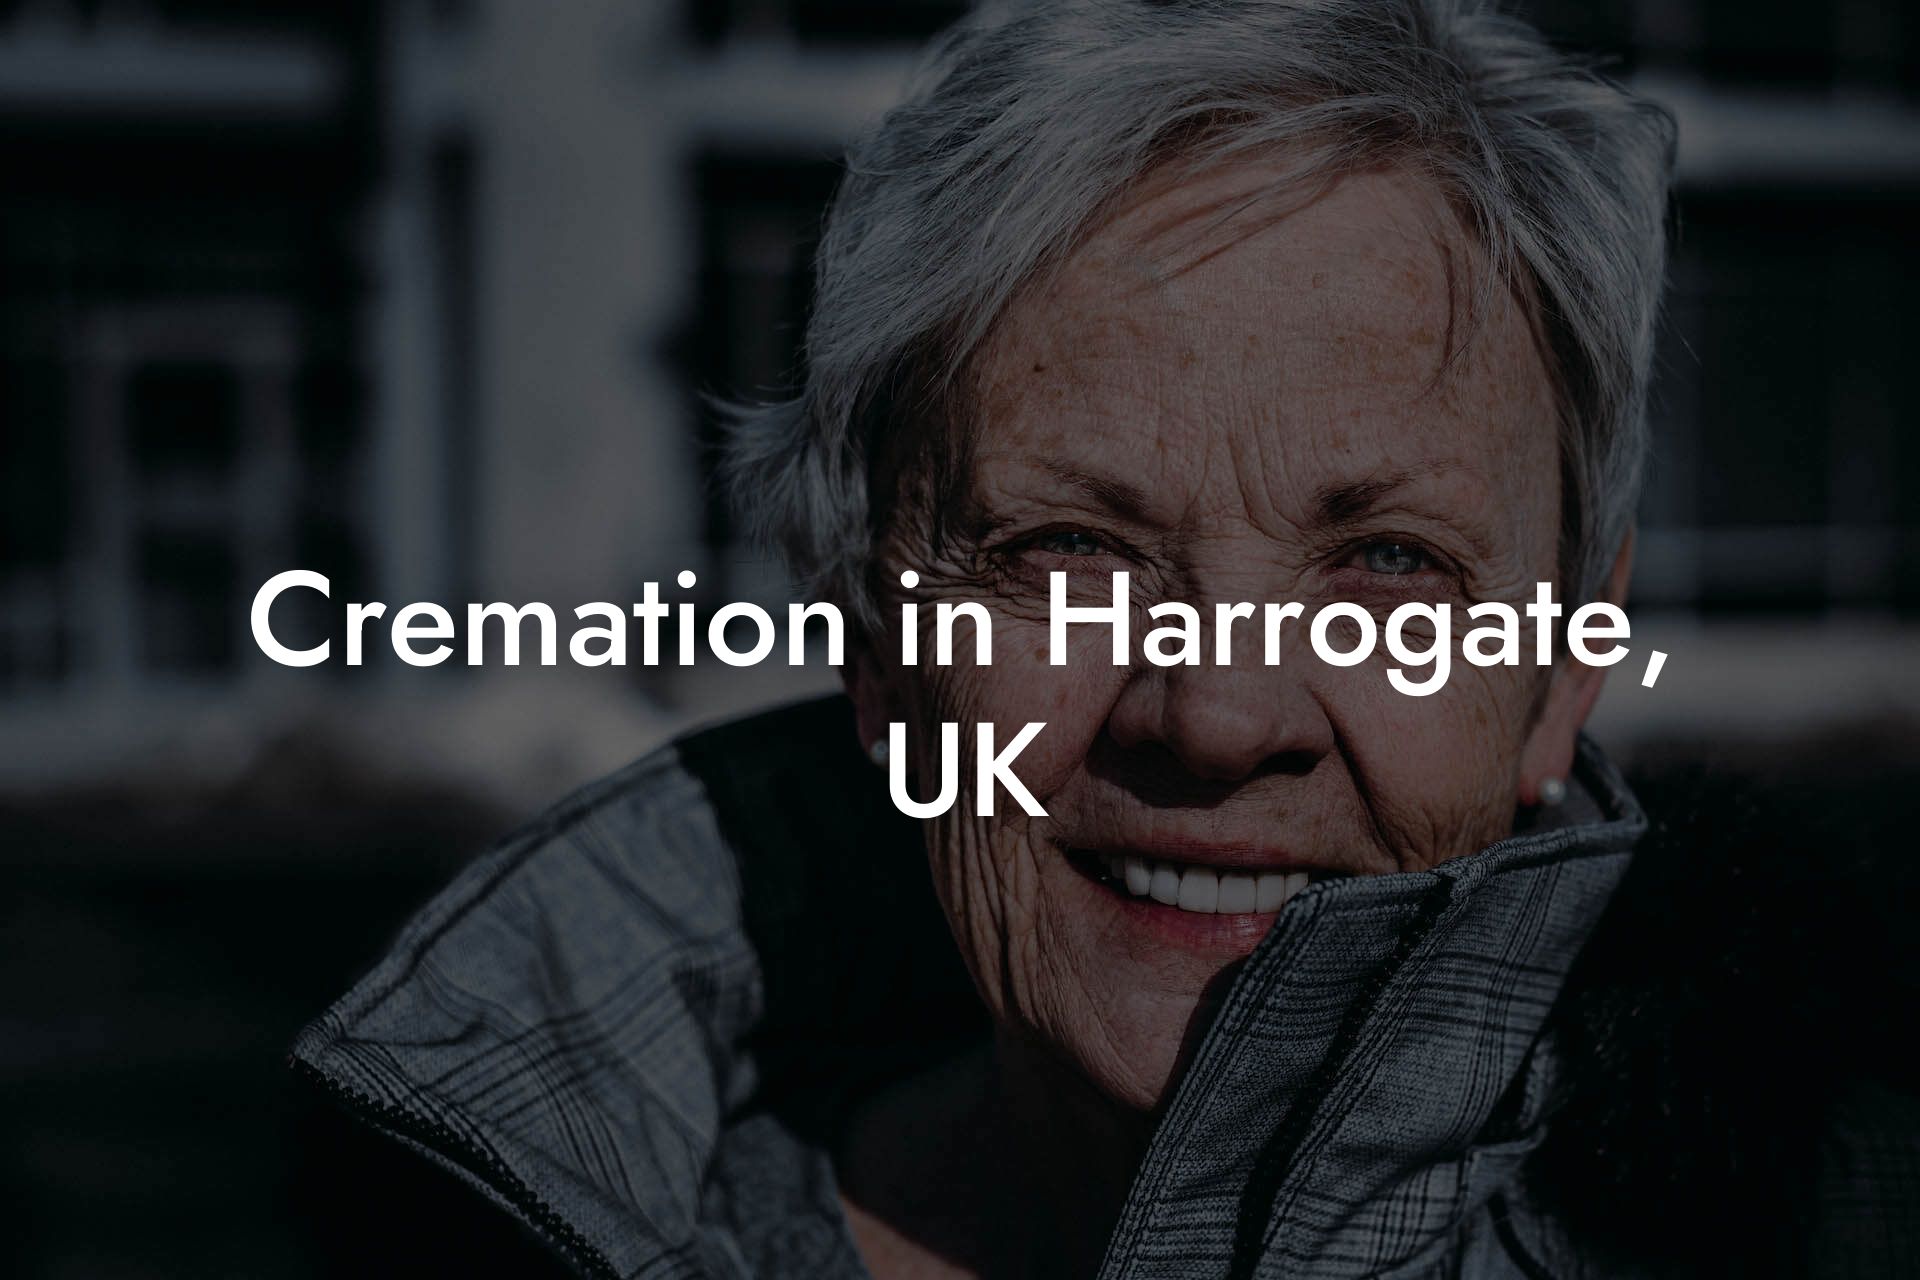 Cremation in Harrogate, UK